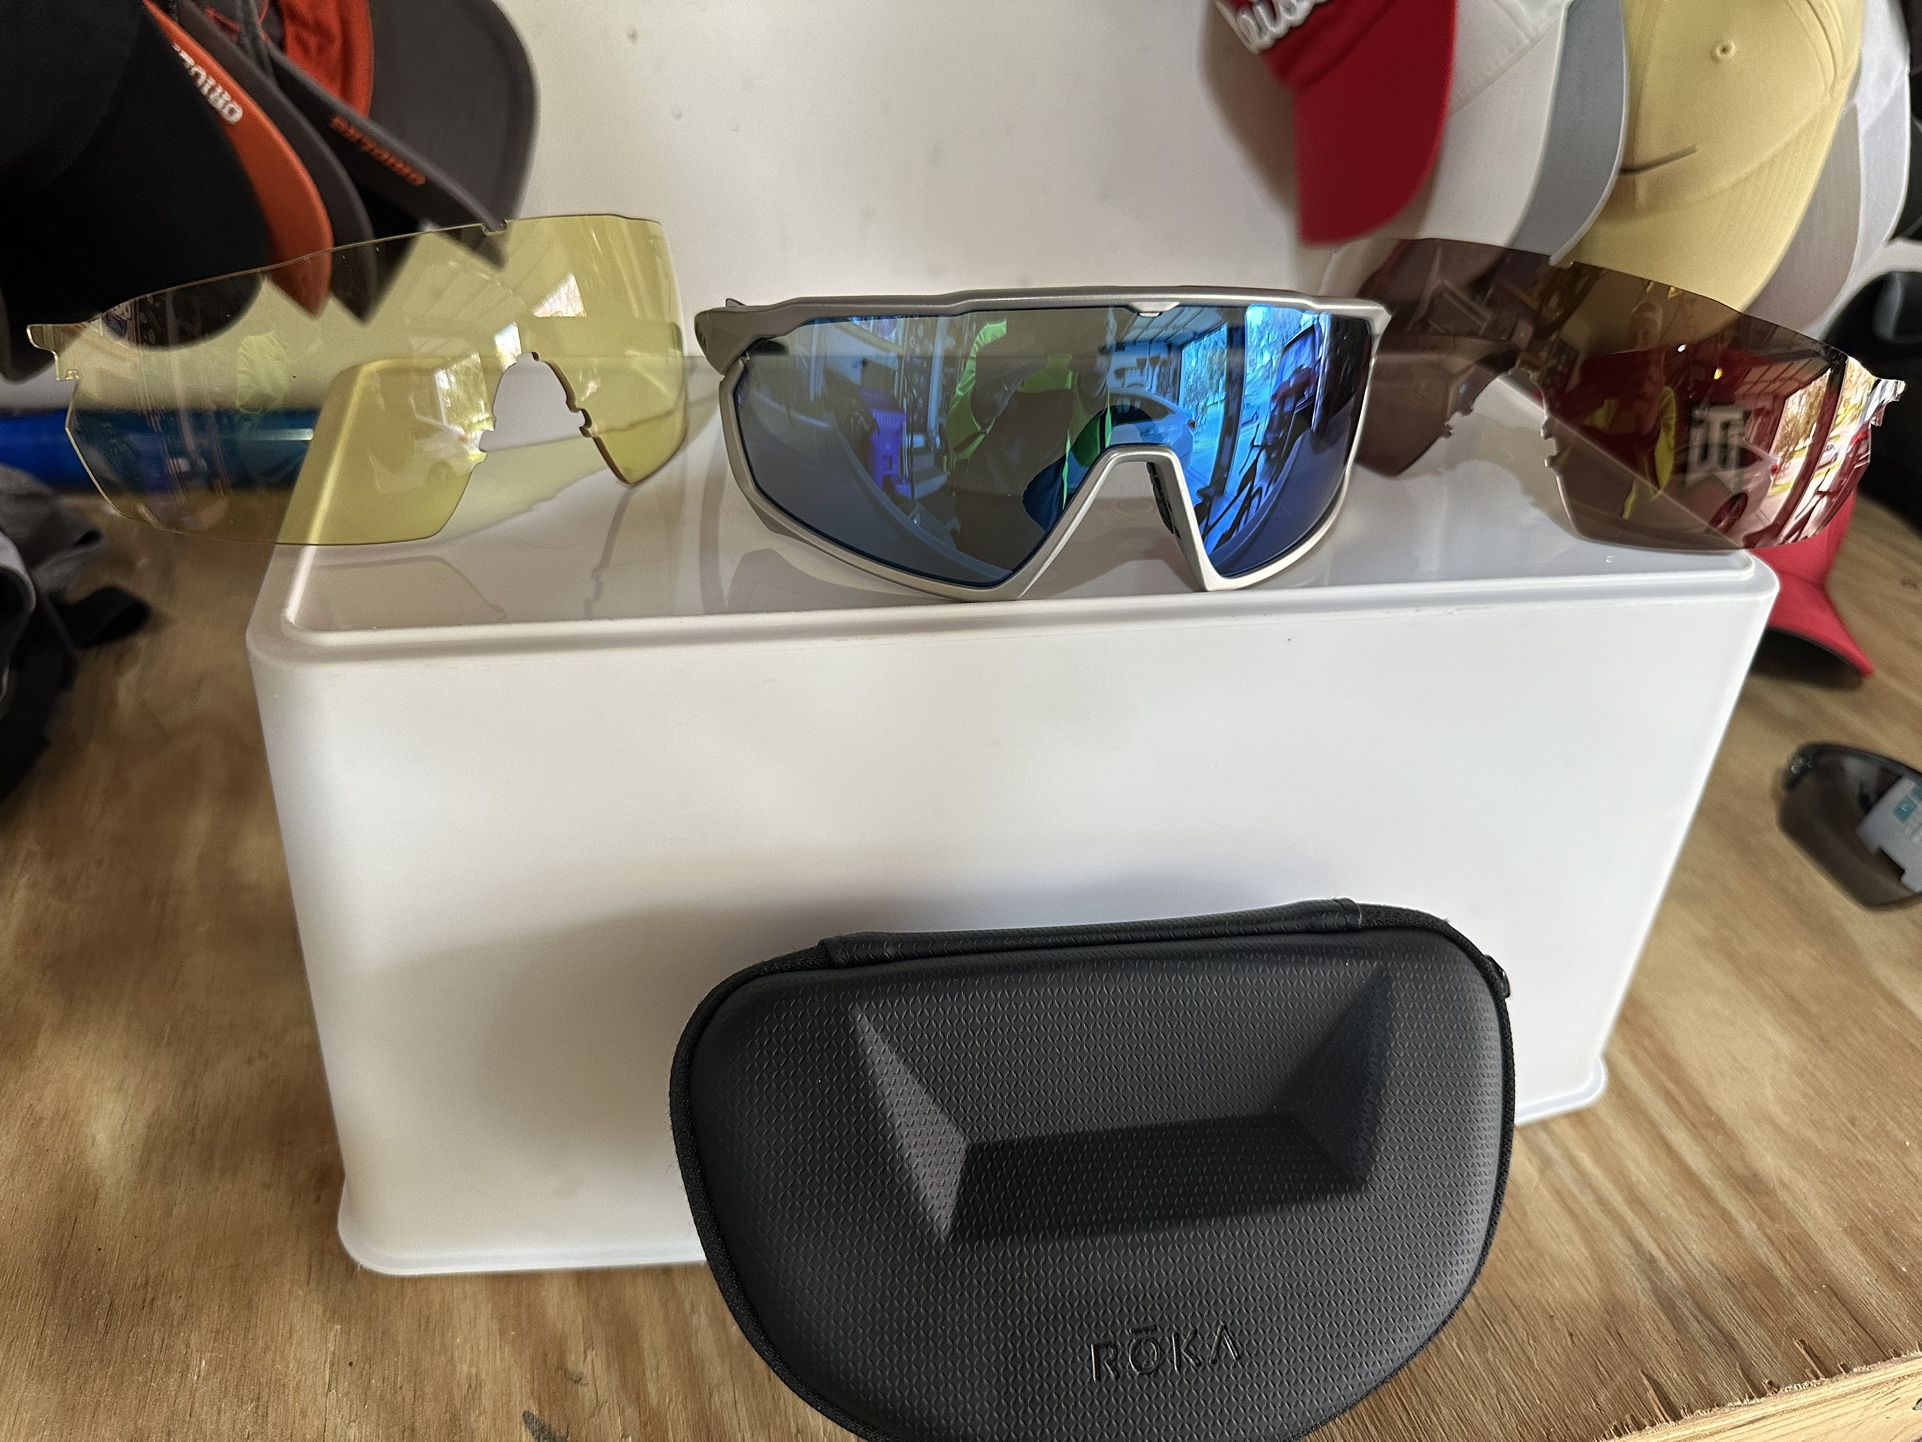 Roka CP-1x Performance Sunglasses - Frame with three lenses